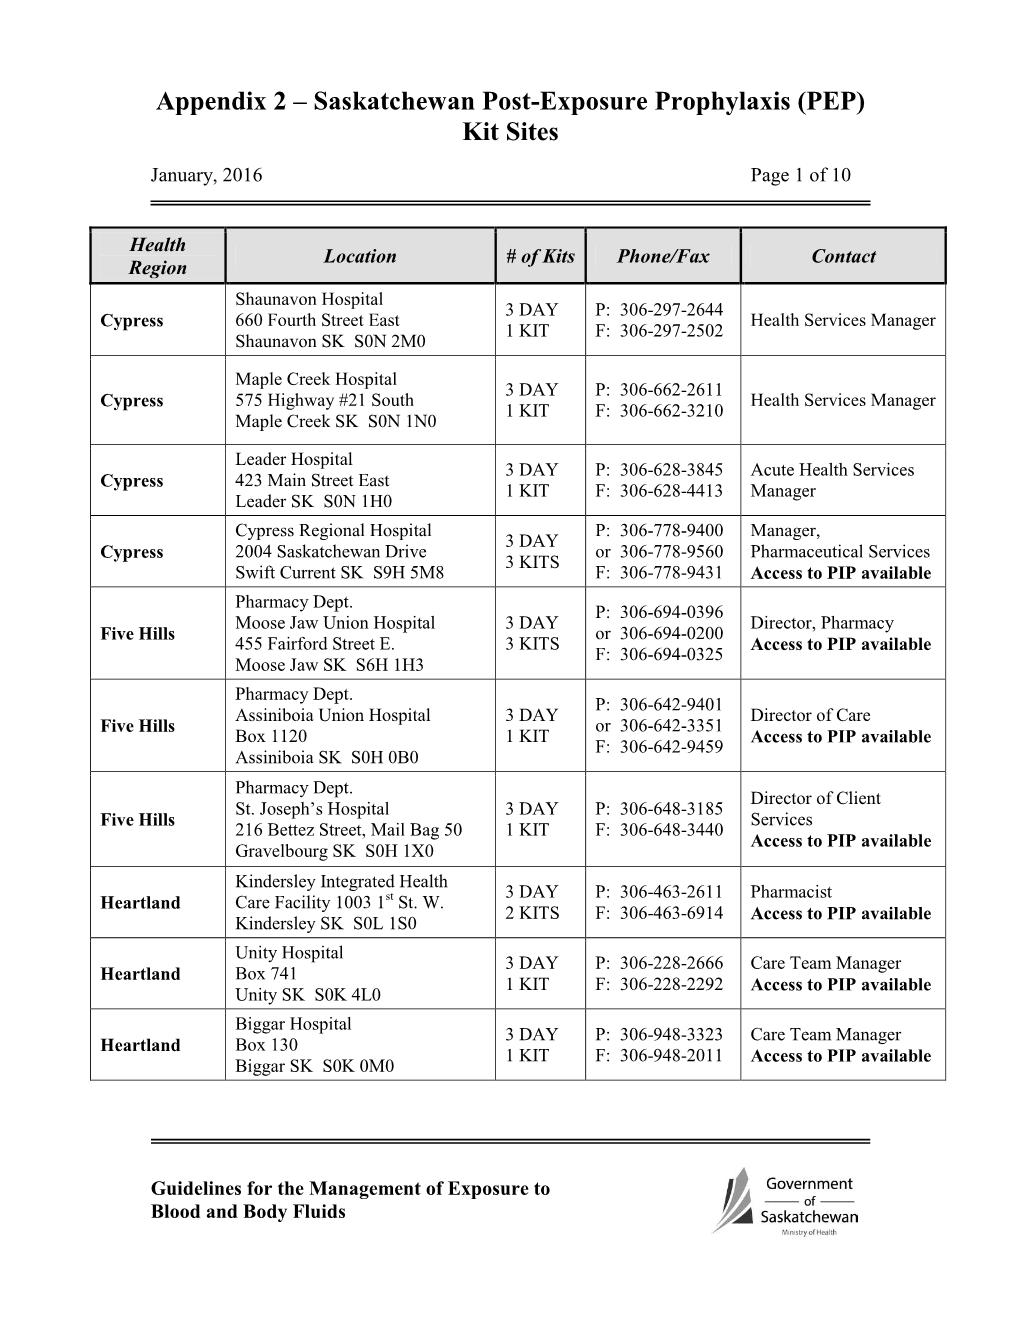 Saskatchewan Post-Exposure Prophylaxis (PEP) Kit Sites